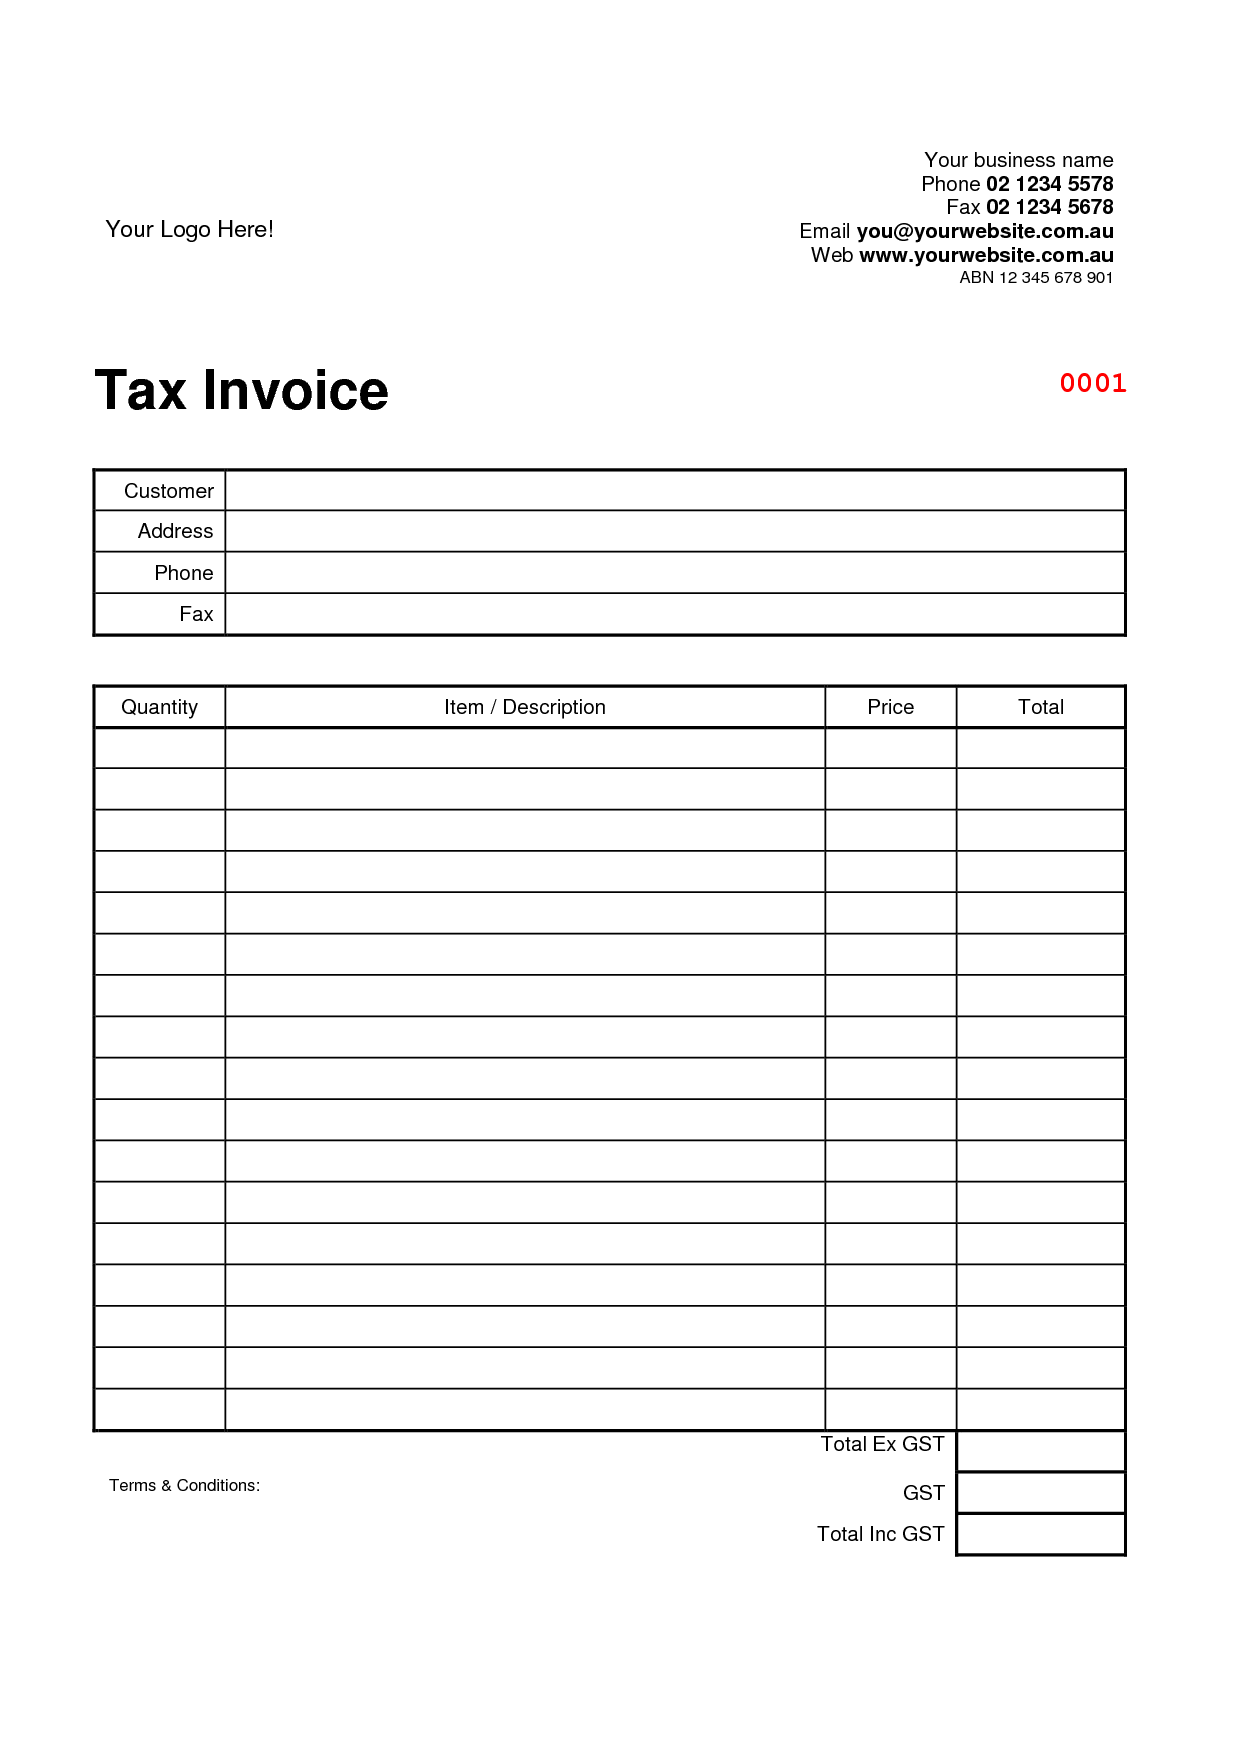 Tax Invoice Format In Excel Malaysia Design Template Australia W 